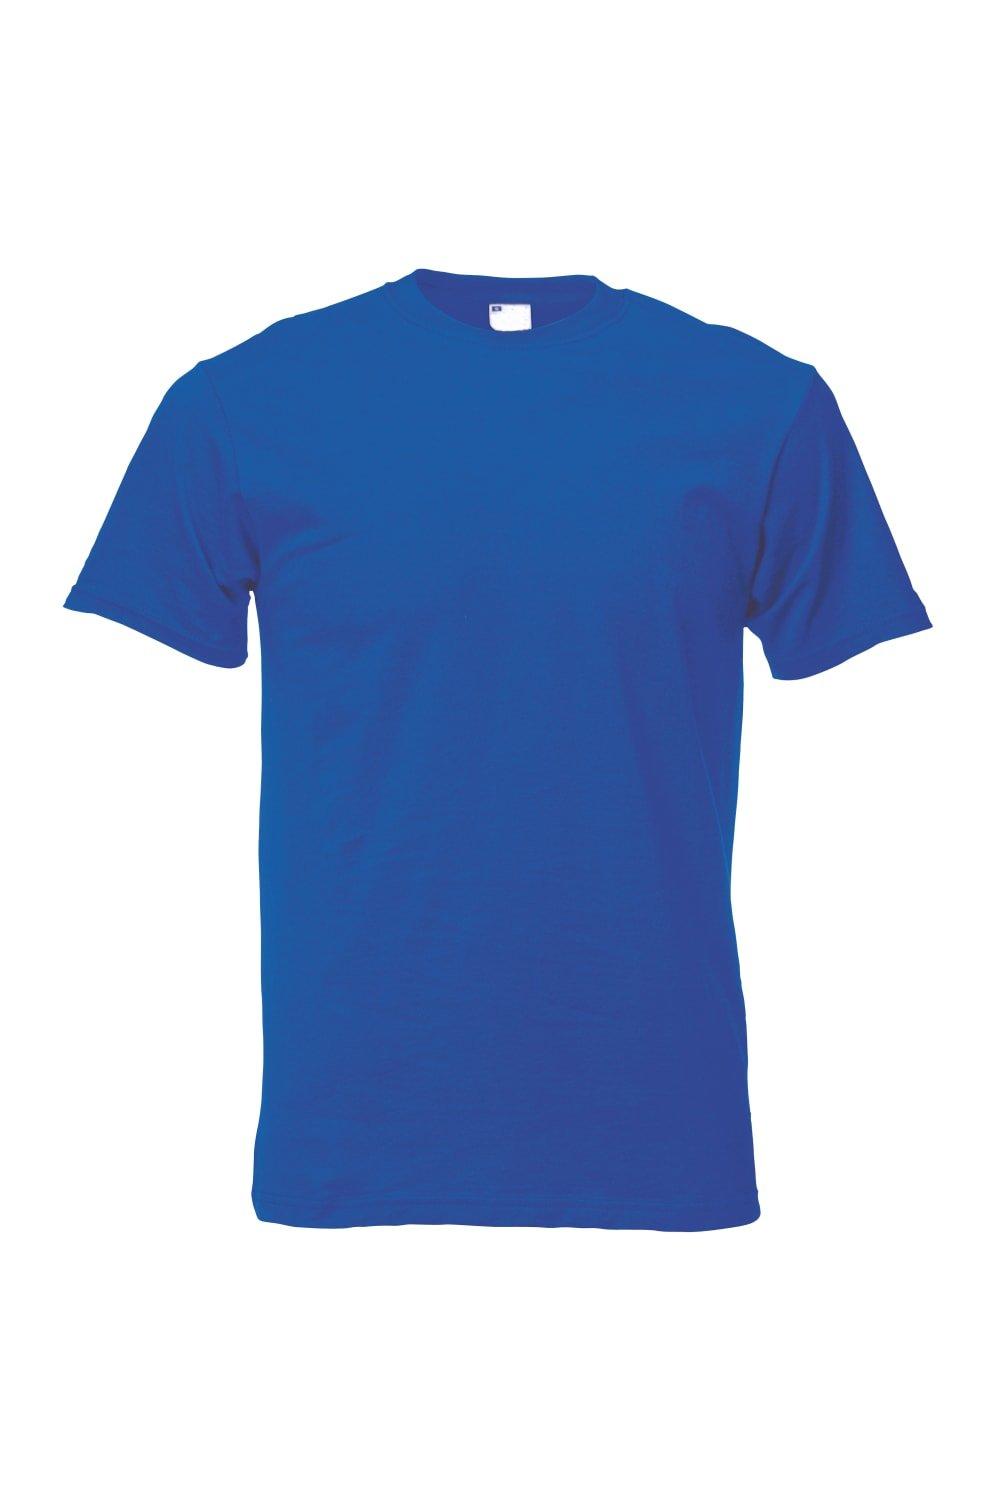 Повседневная футболка с коротким рукавом Universal Textiles, синий повседневная футболка с коротким рукавом universal textiles синий